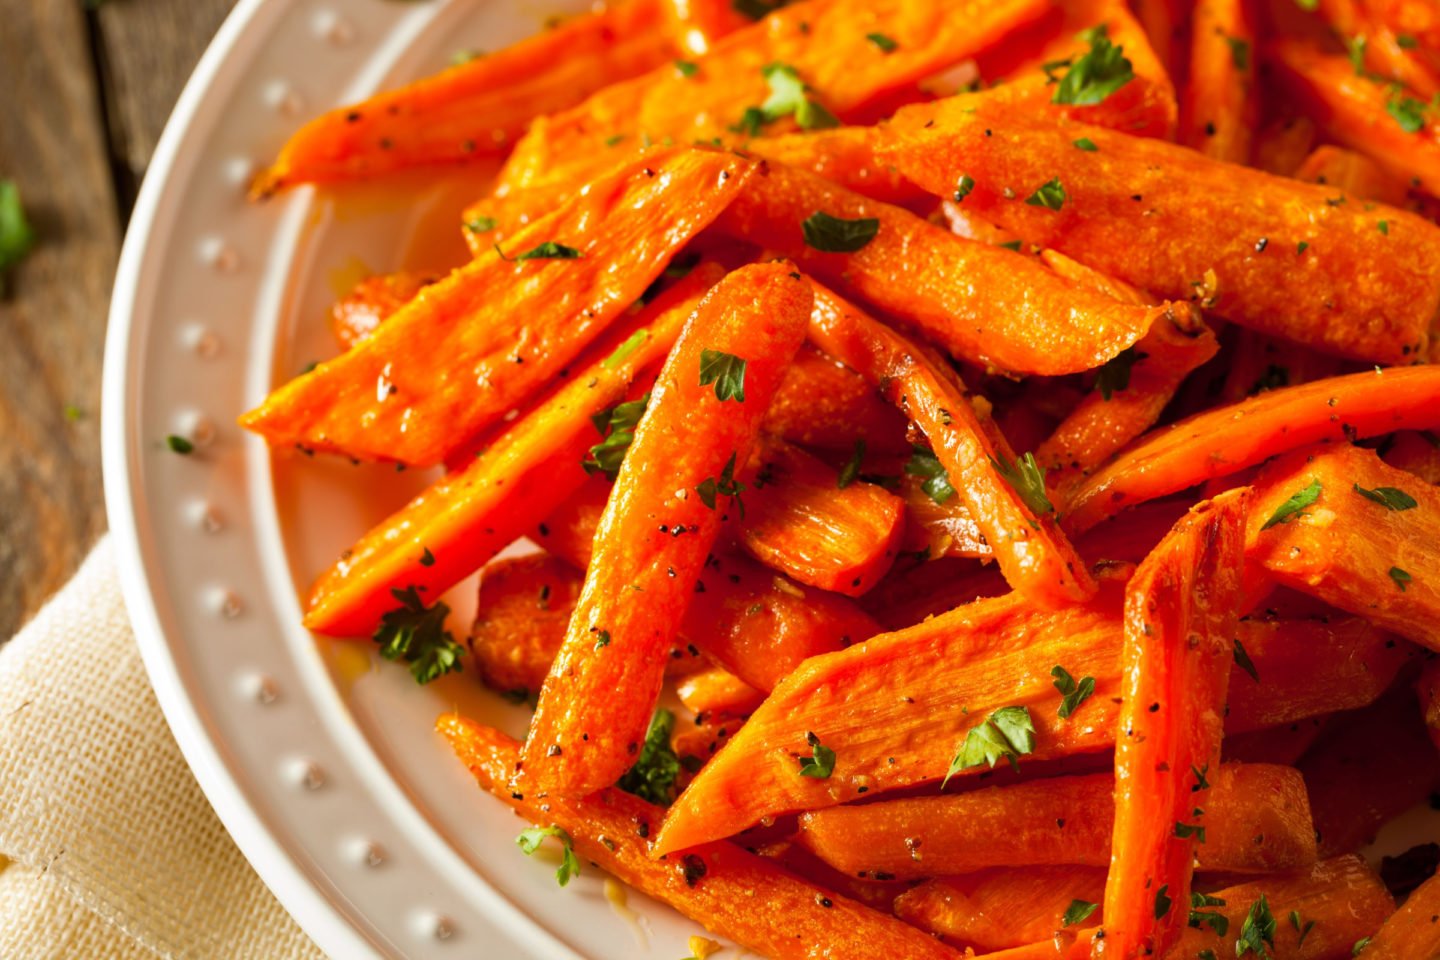 Homemade Roasted Carrots